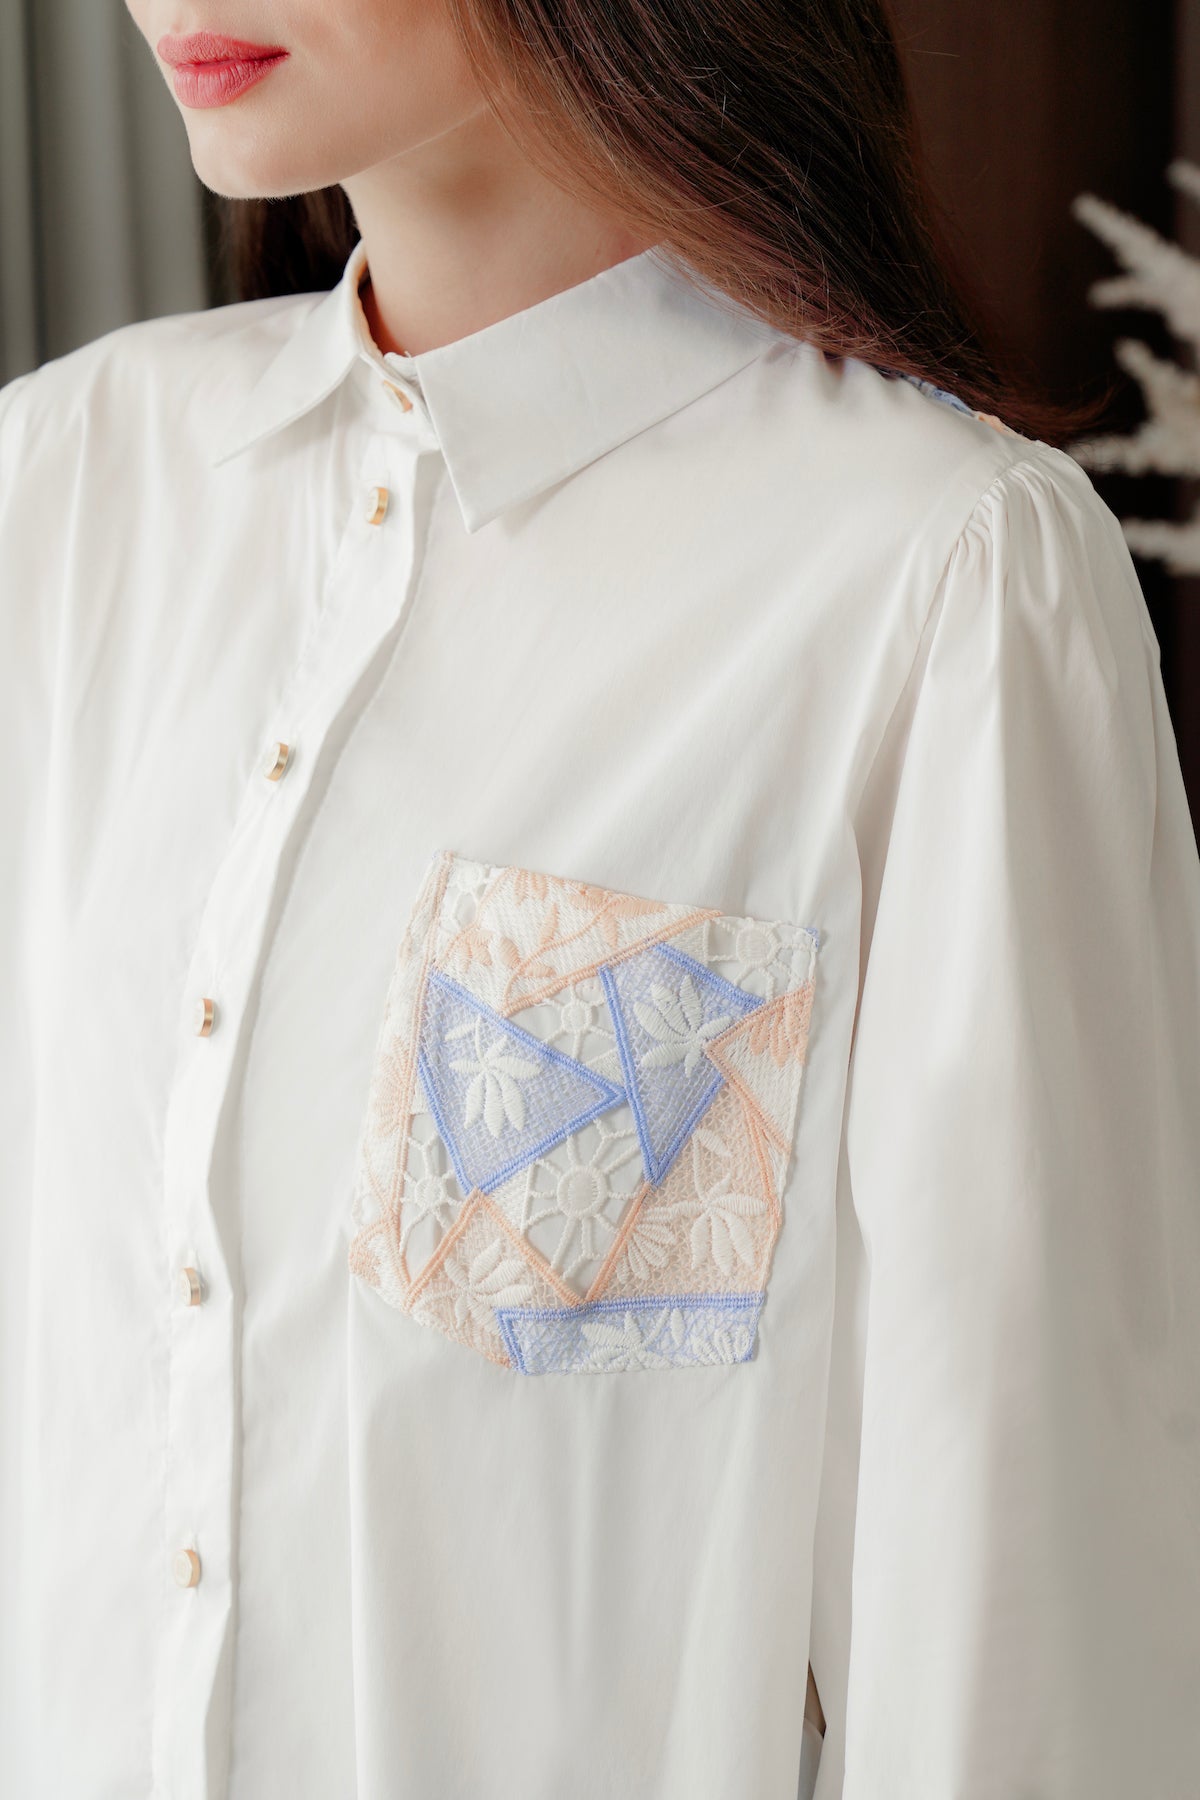 Laura Lace Shirt - Broken White